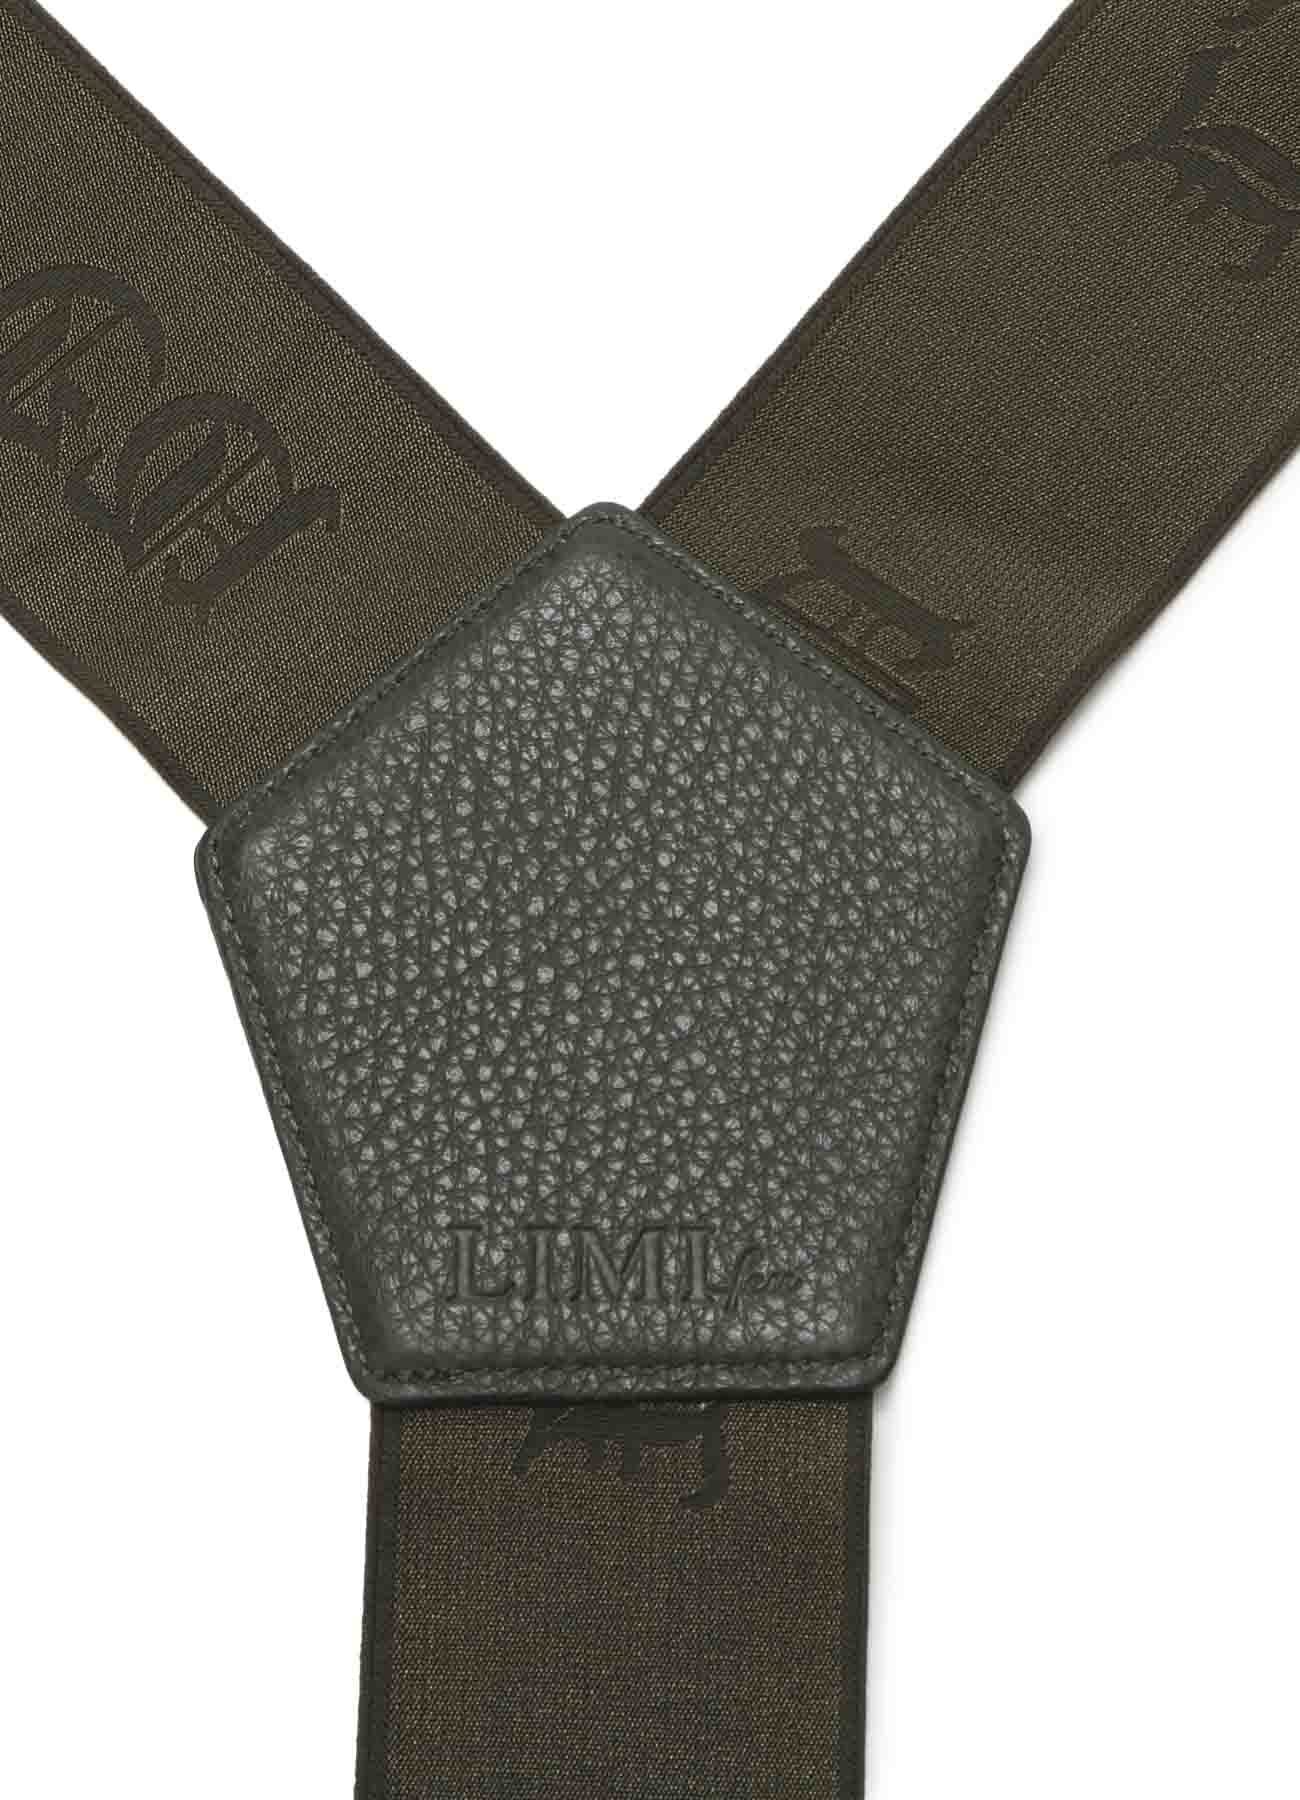 Ny/Logo Elastic Leather Combi Suspender